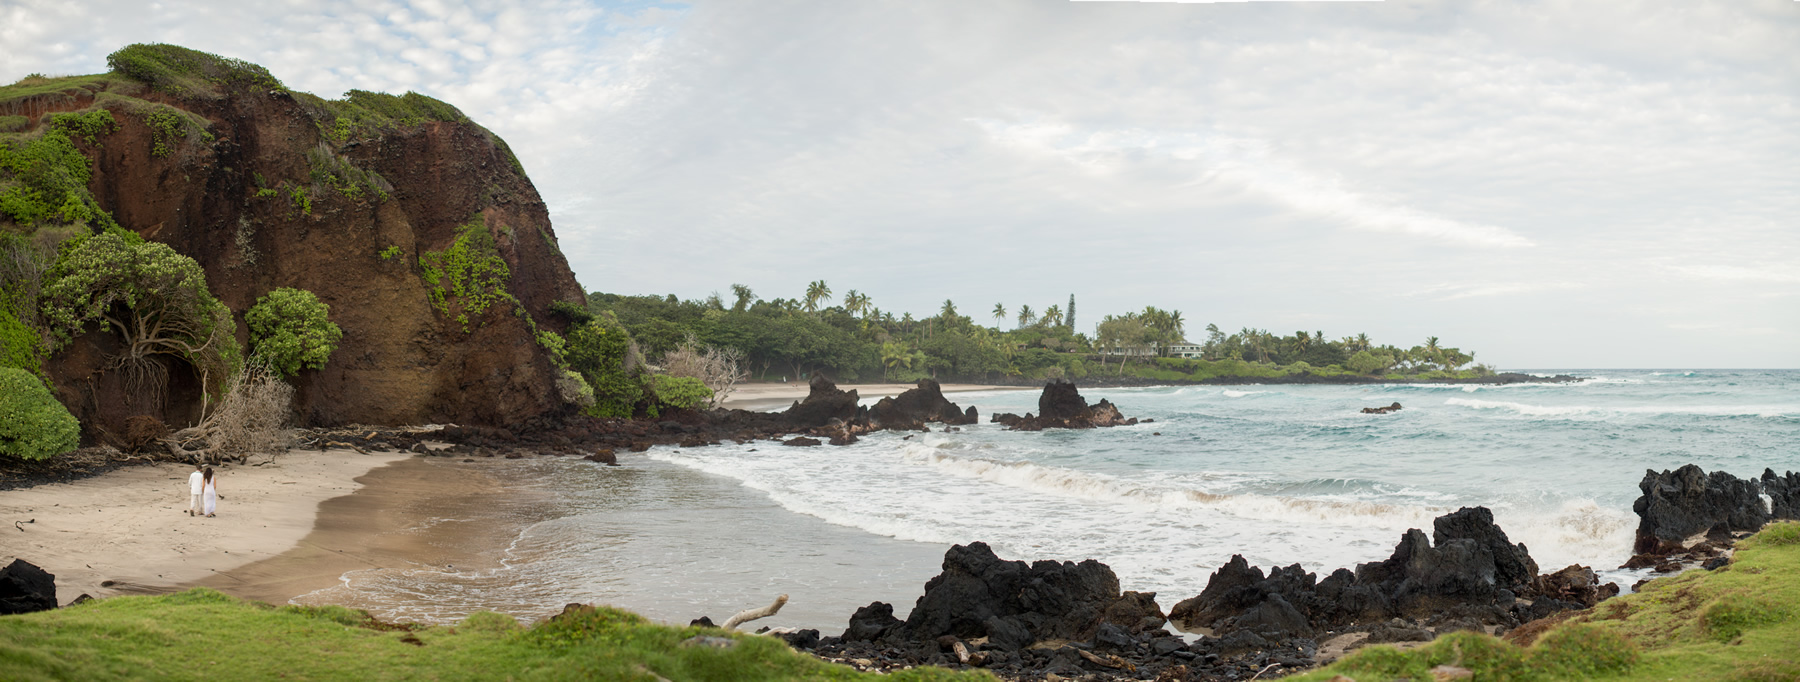 A couple walks along a deserted beach in Hana Maui after their wedding ceremony.